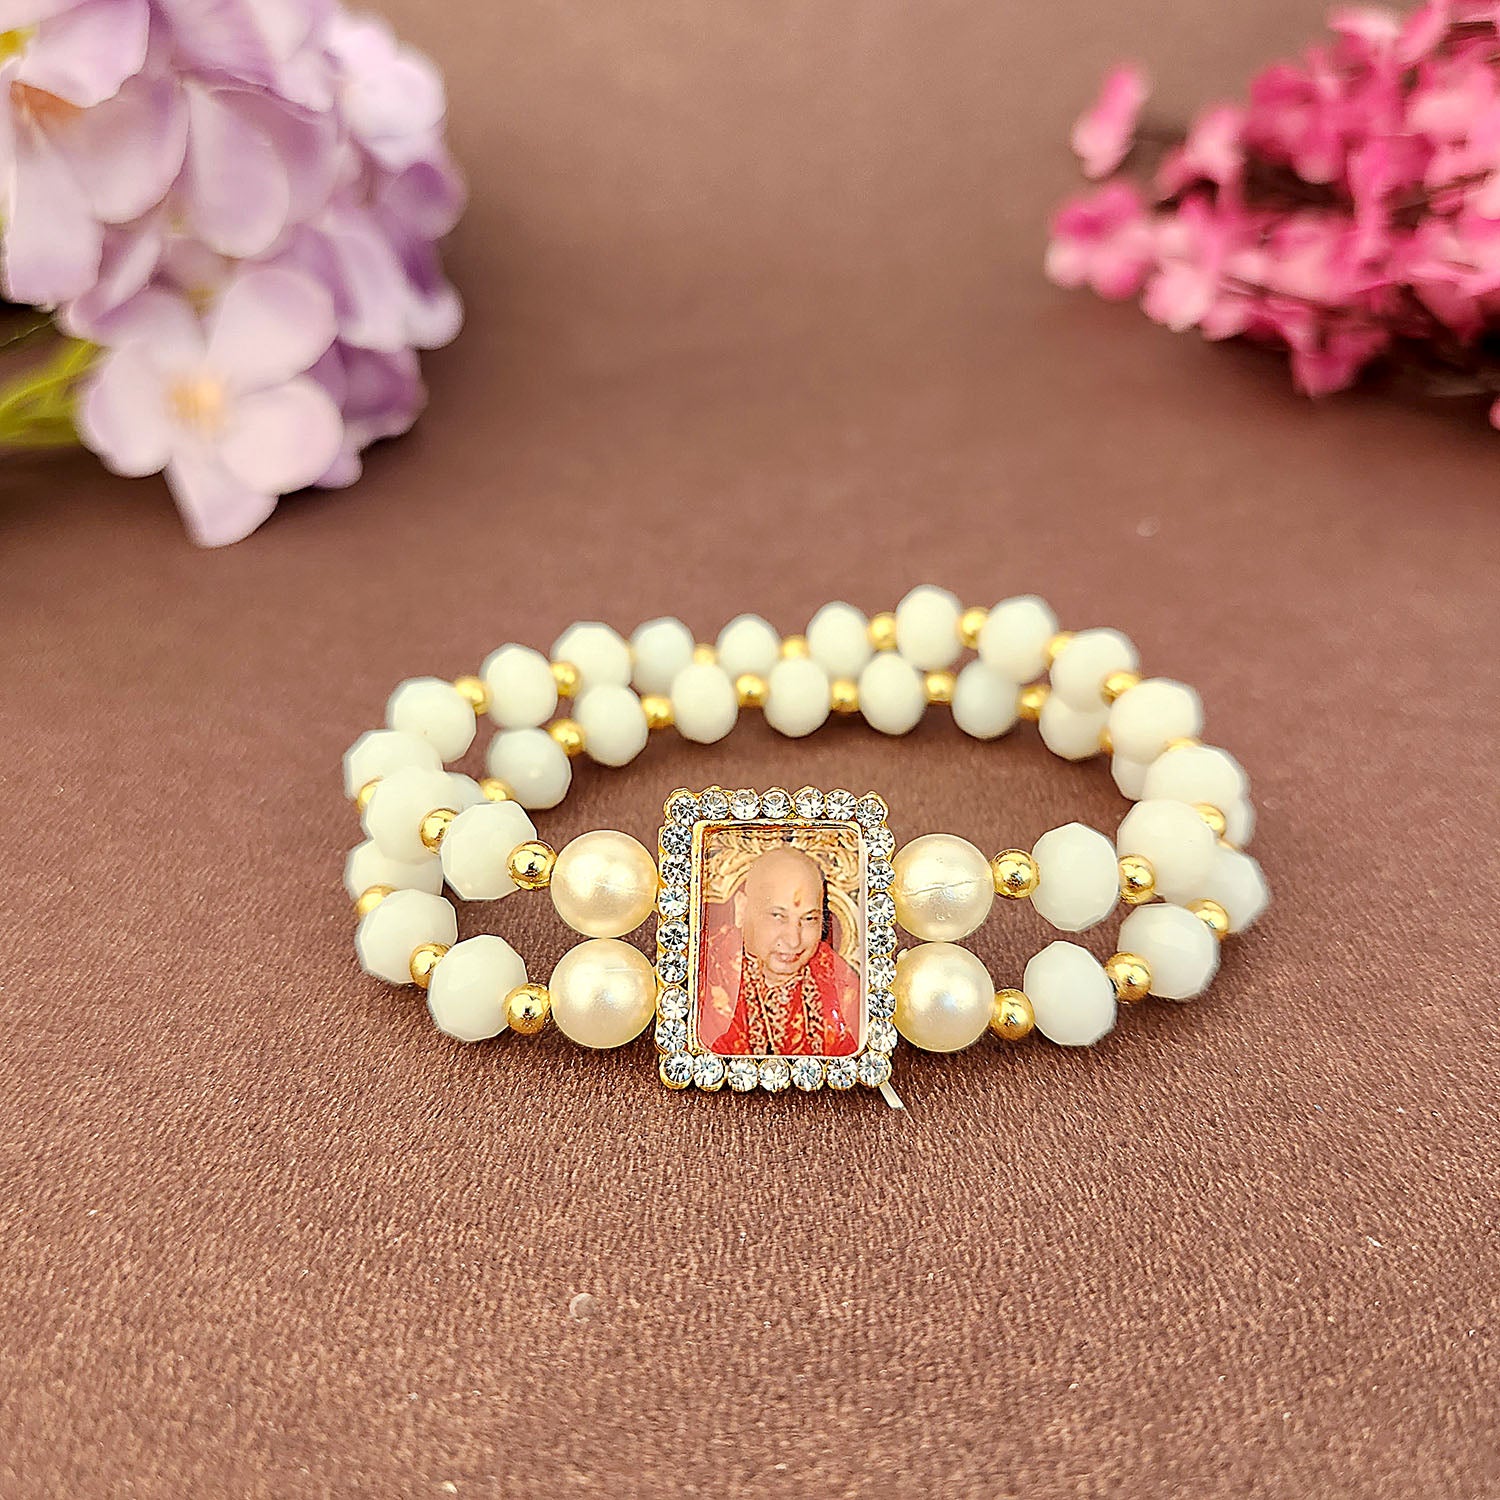 Handmade Bracelet with a Heart Charm – Sutra Wear